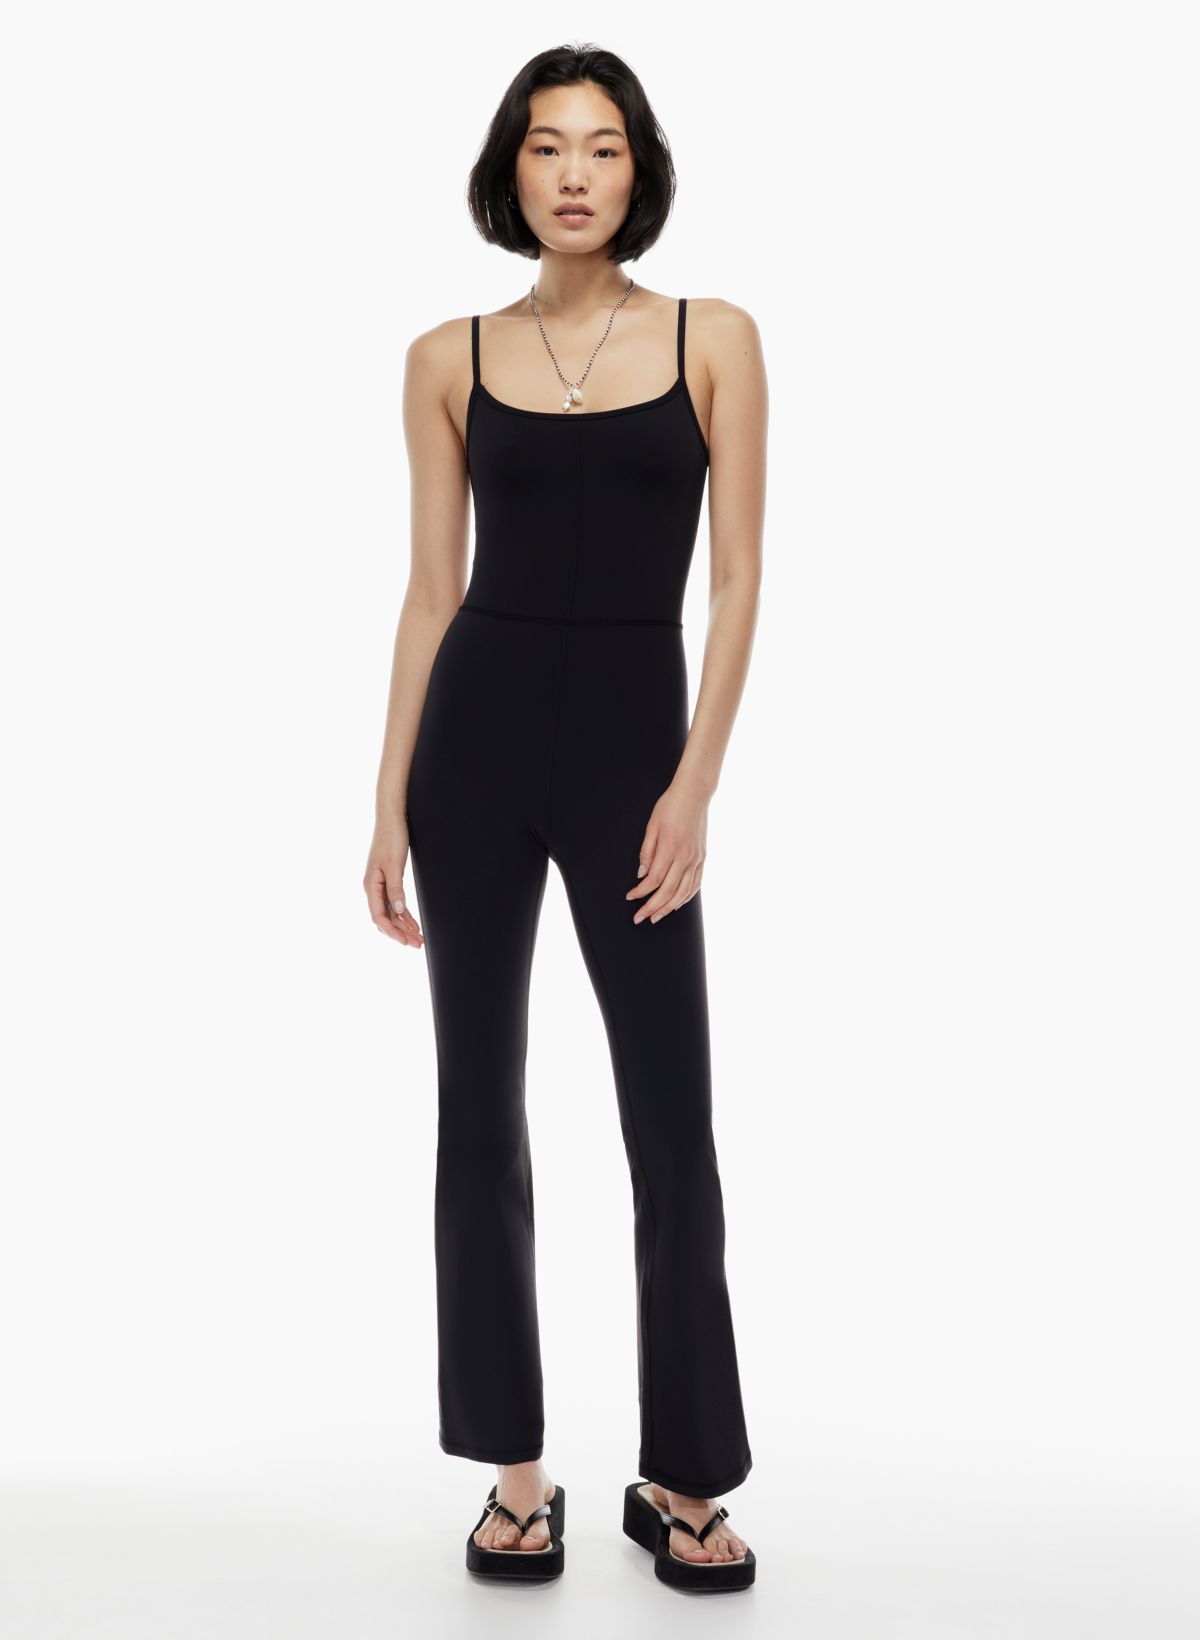 NWT Women's Flare Long Bodysuit JoyLab Black Medium Viral Aritzia